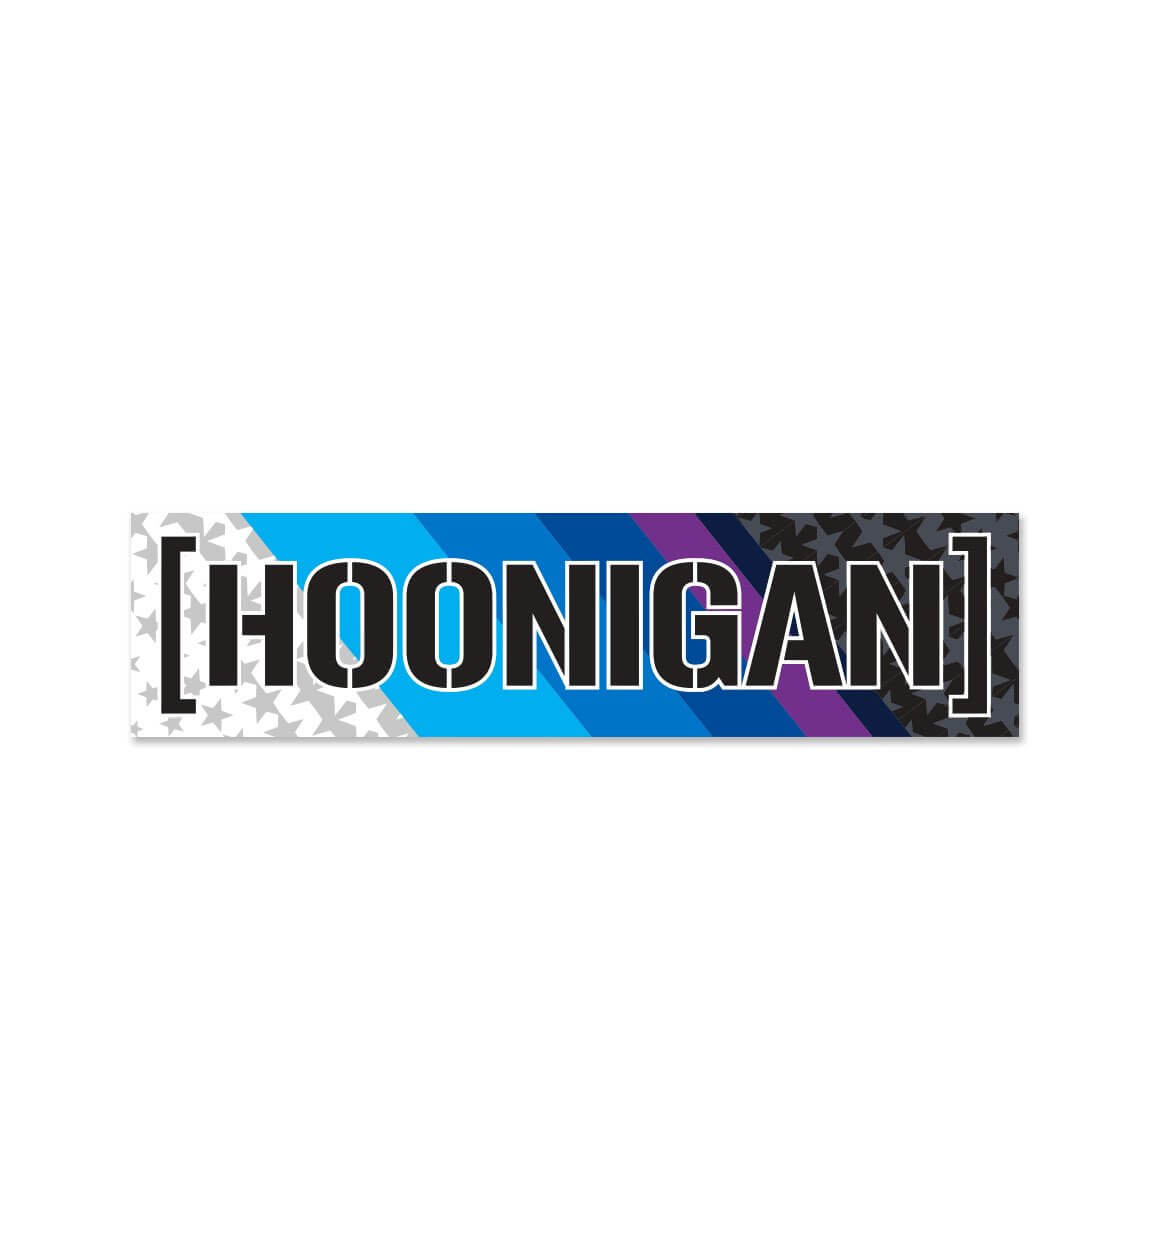 Hoonigan coaster by CustomCreations - MakerWorld